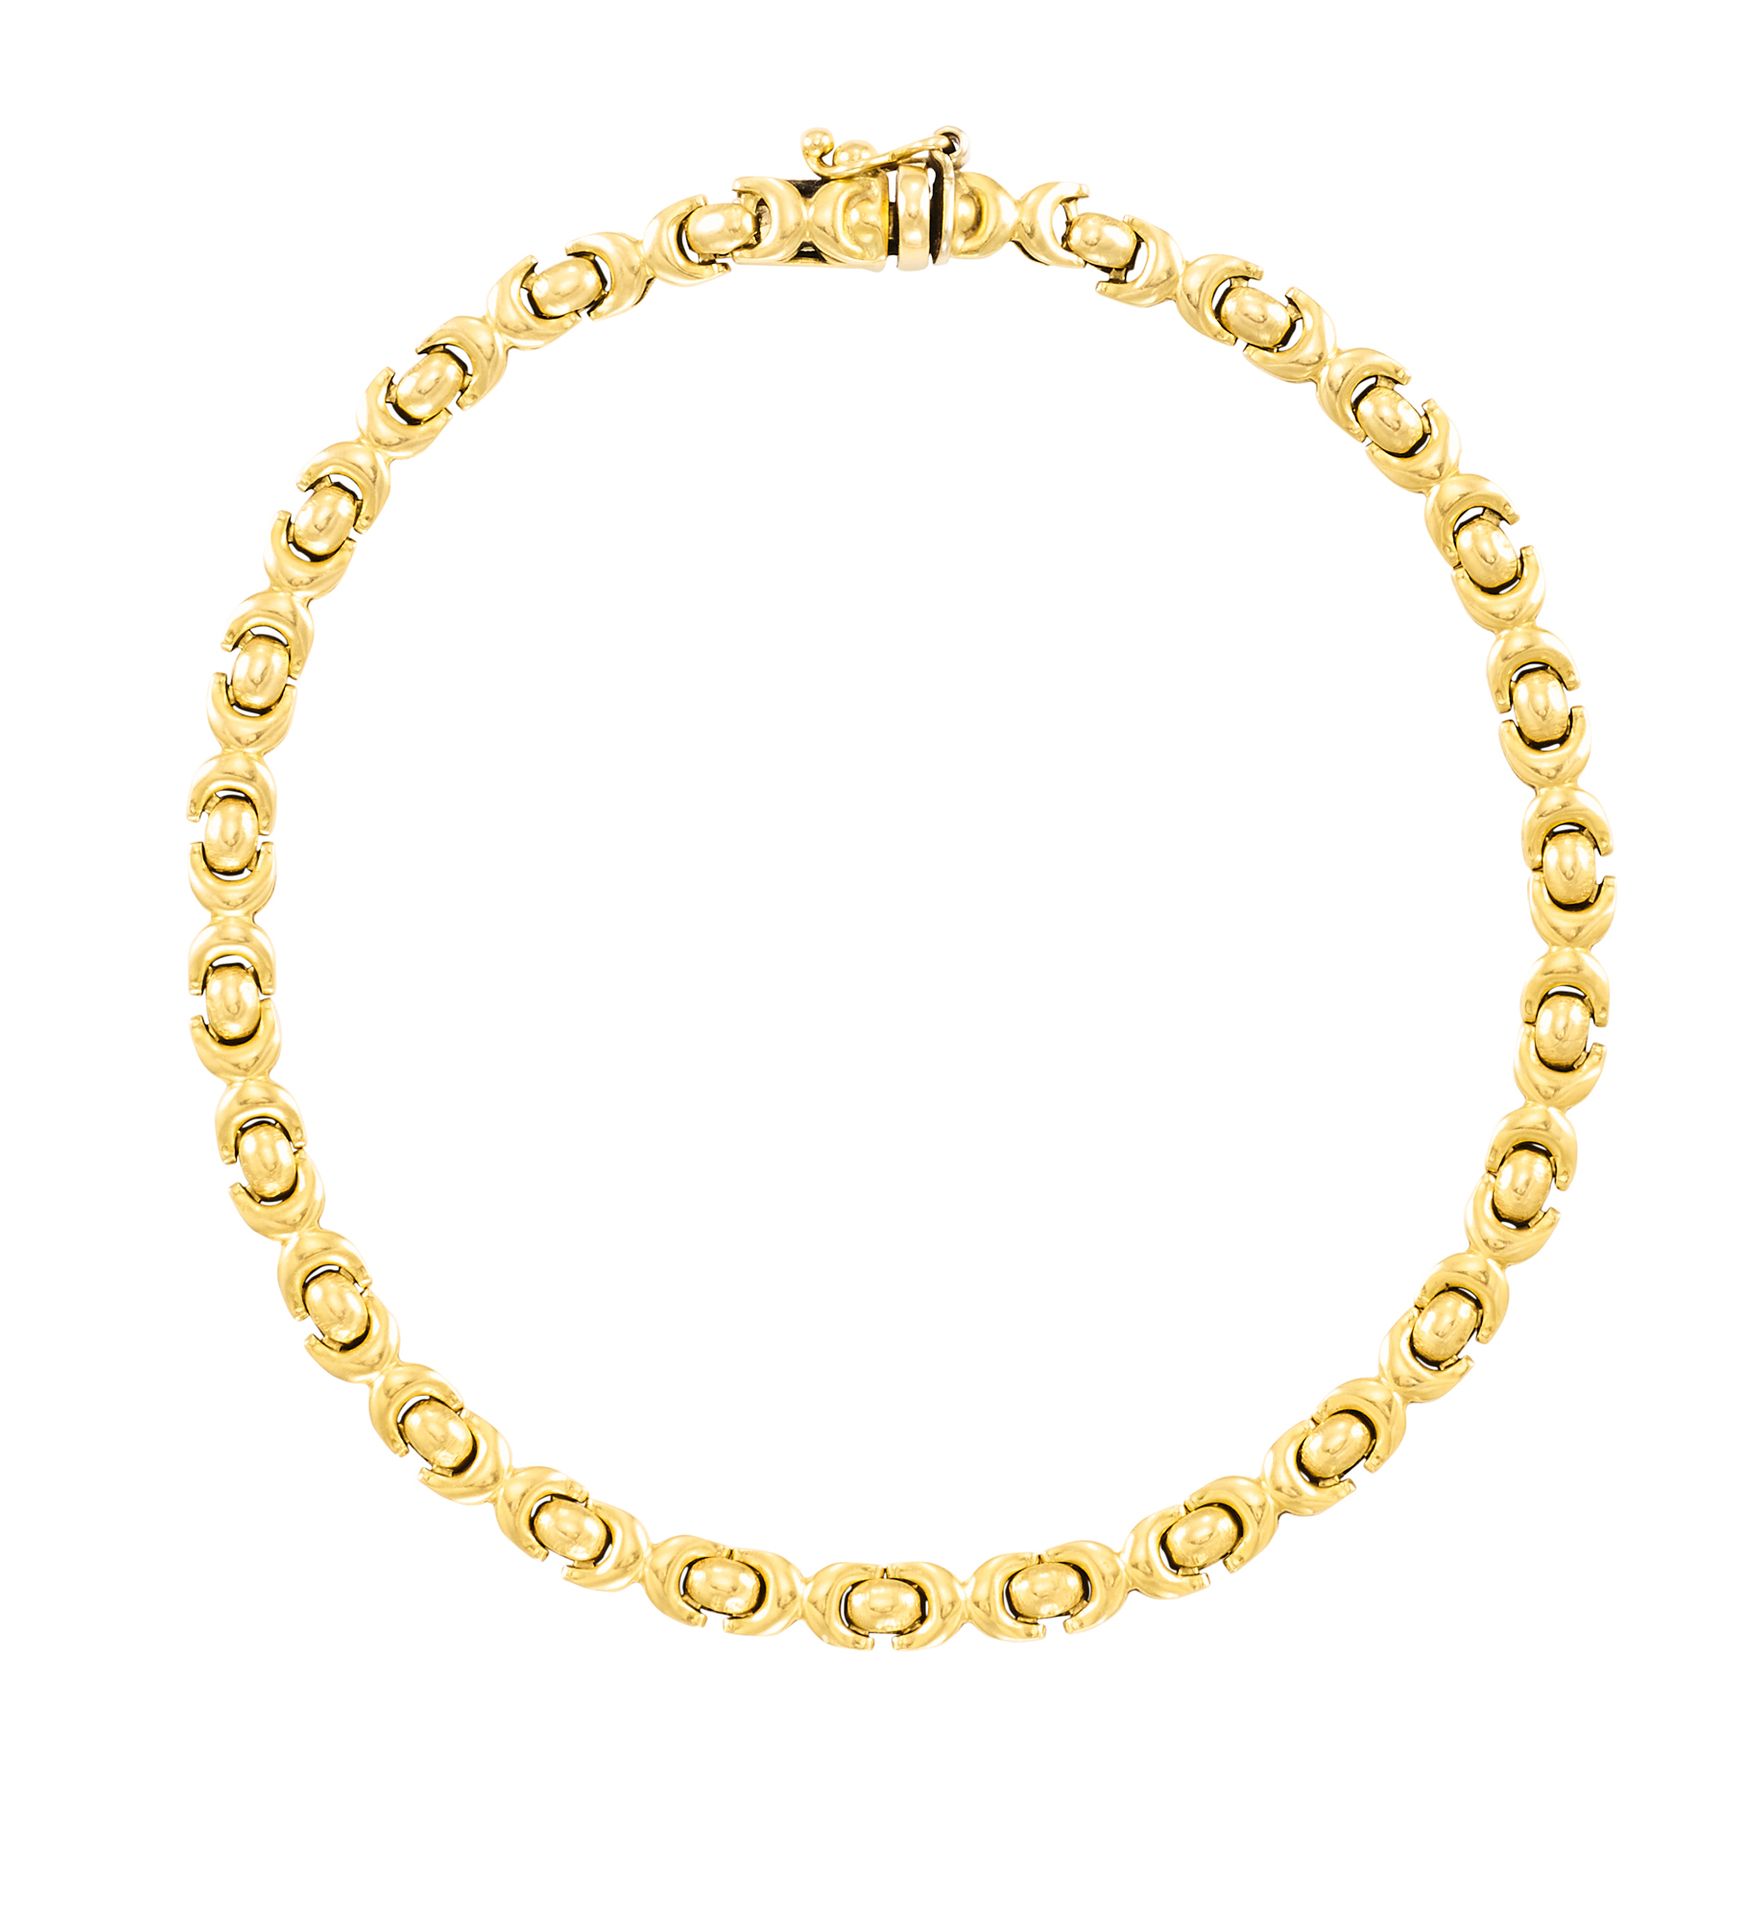 Bracelet en or jaune
L : 20 cm
Pb : 8,90 g (18K-750/1000)